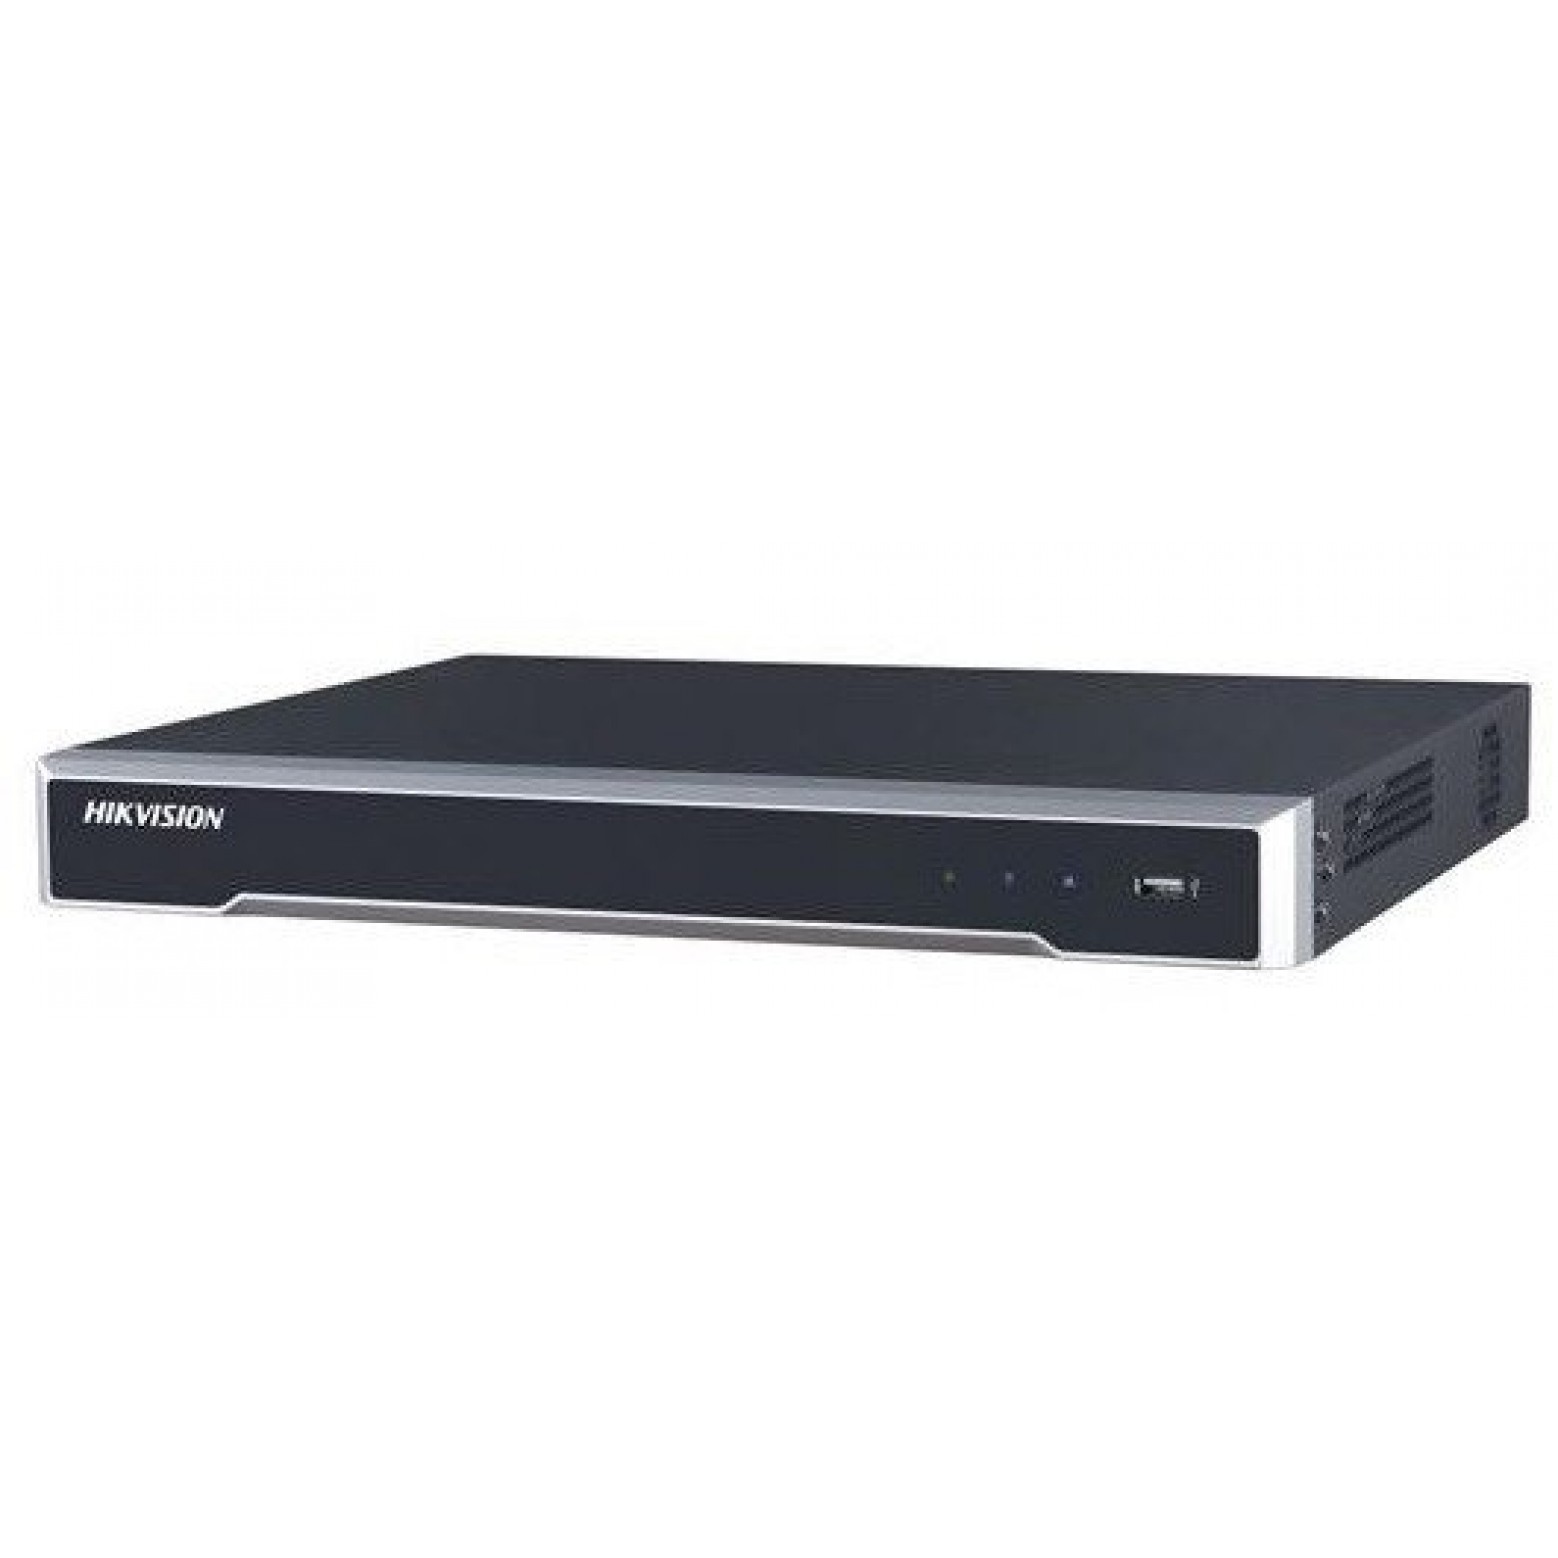 Hikvision DS-7616NI-K2 Netwerk Video Recorder (NVR), Ultra Full HD, 2 SATA